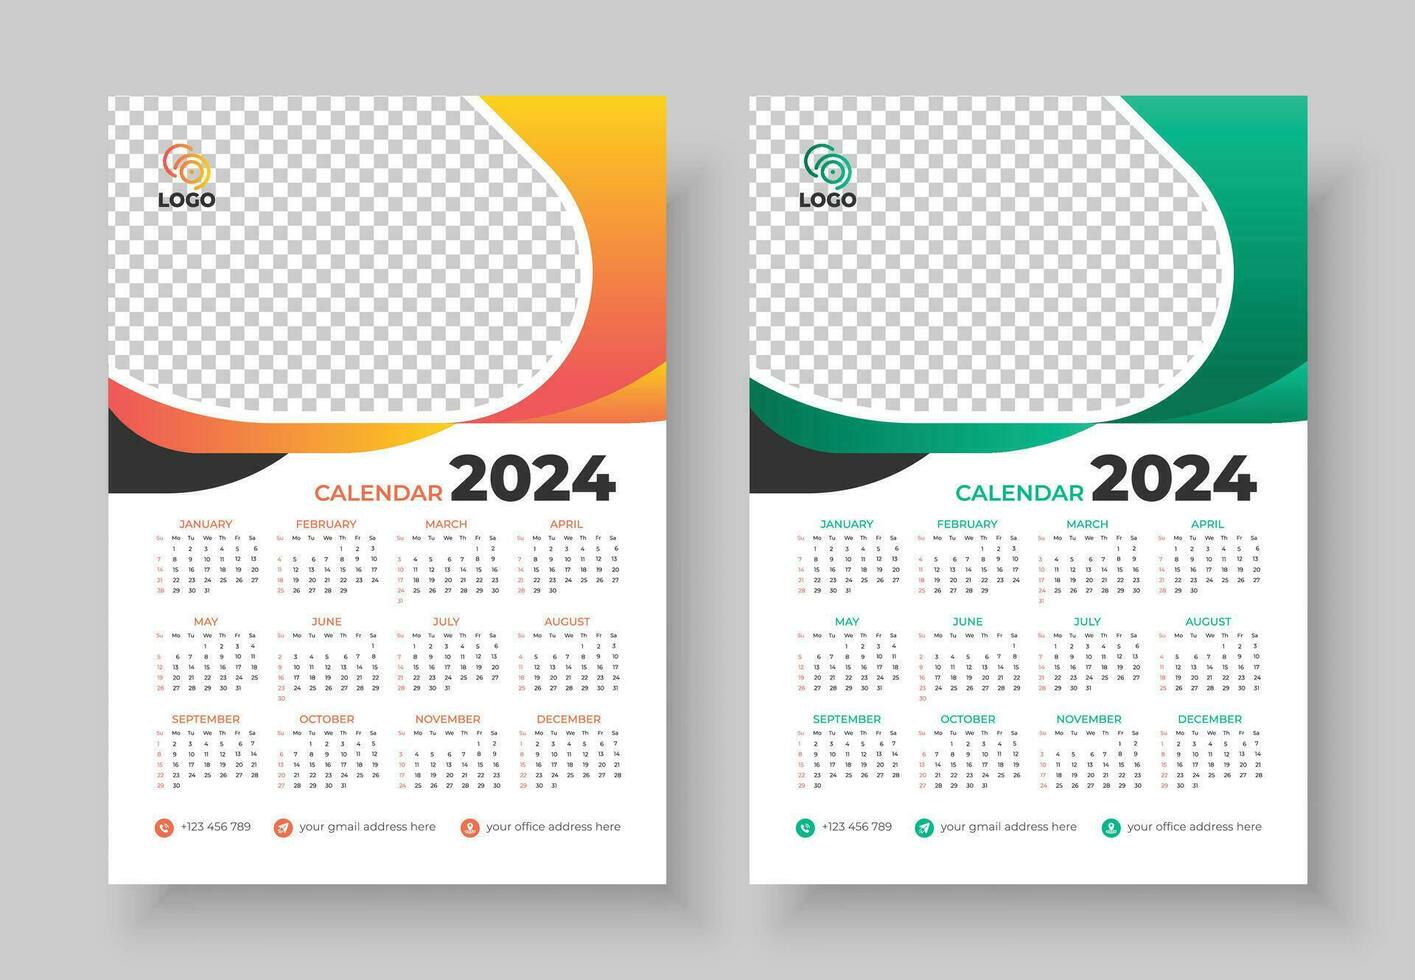 pared calendario 2024 modelo diseño. uno página calendario. 12 meses calendario. semana empieza en domingo vector